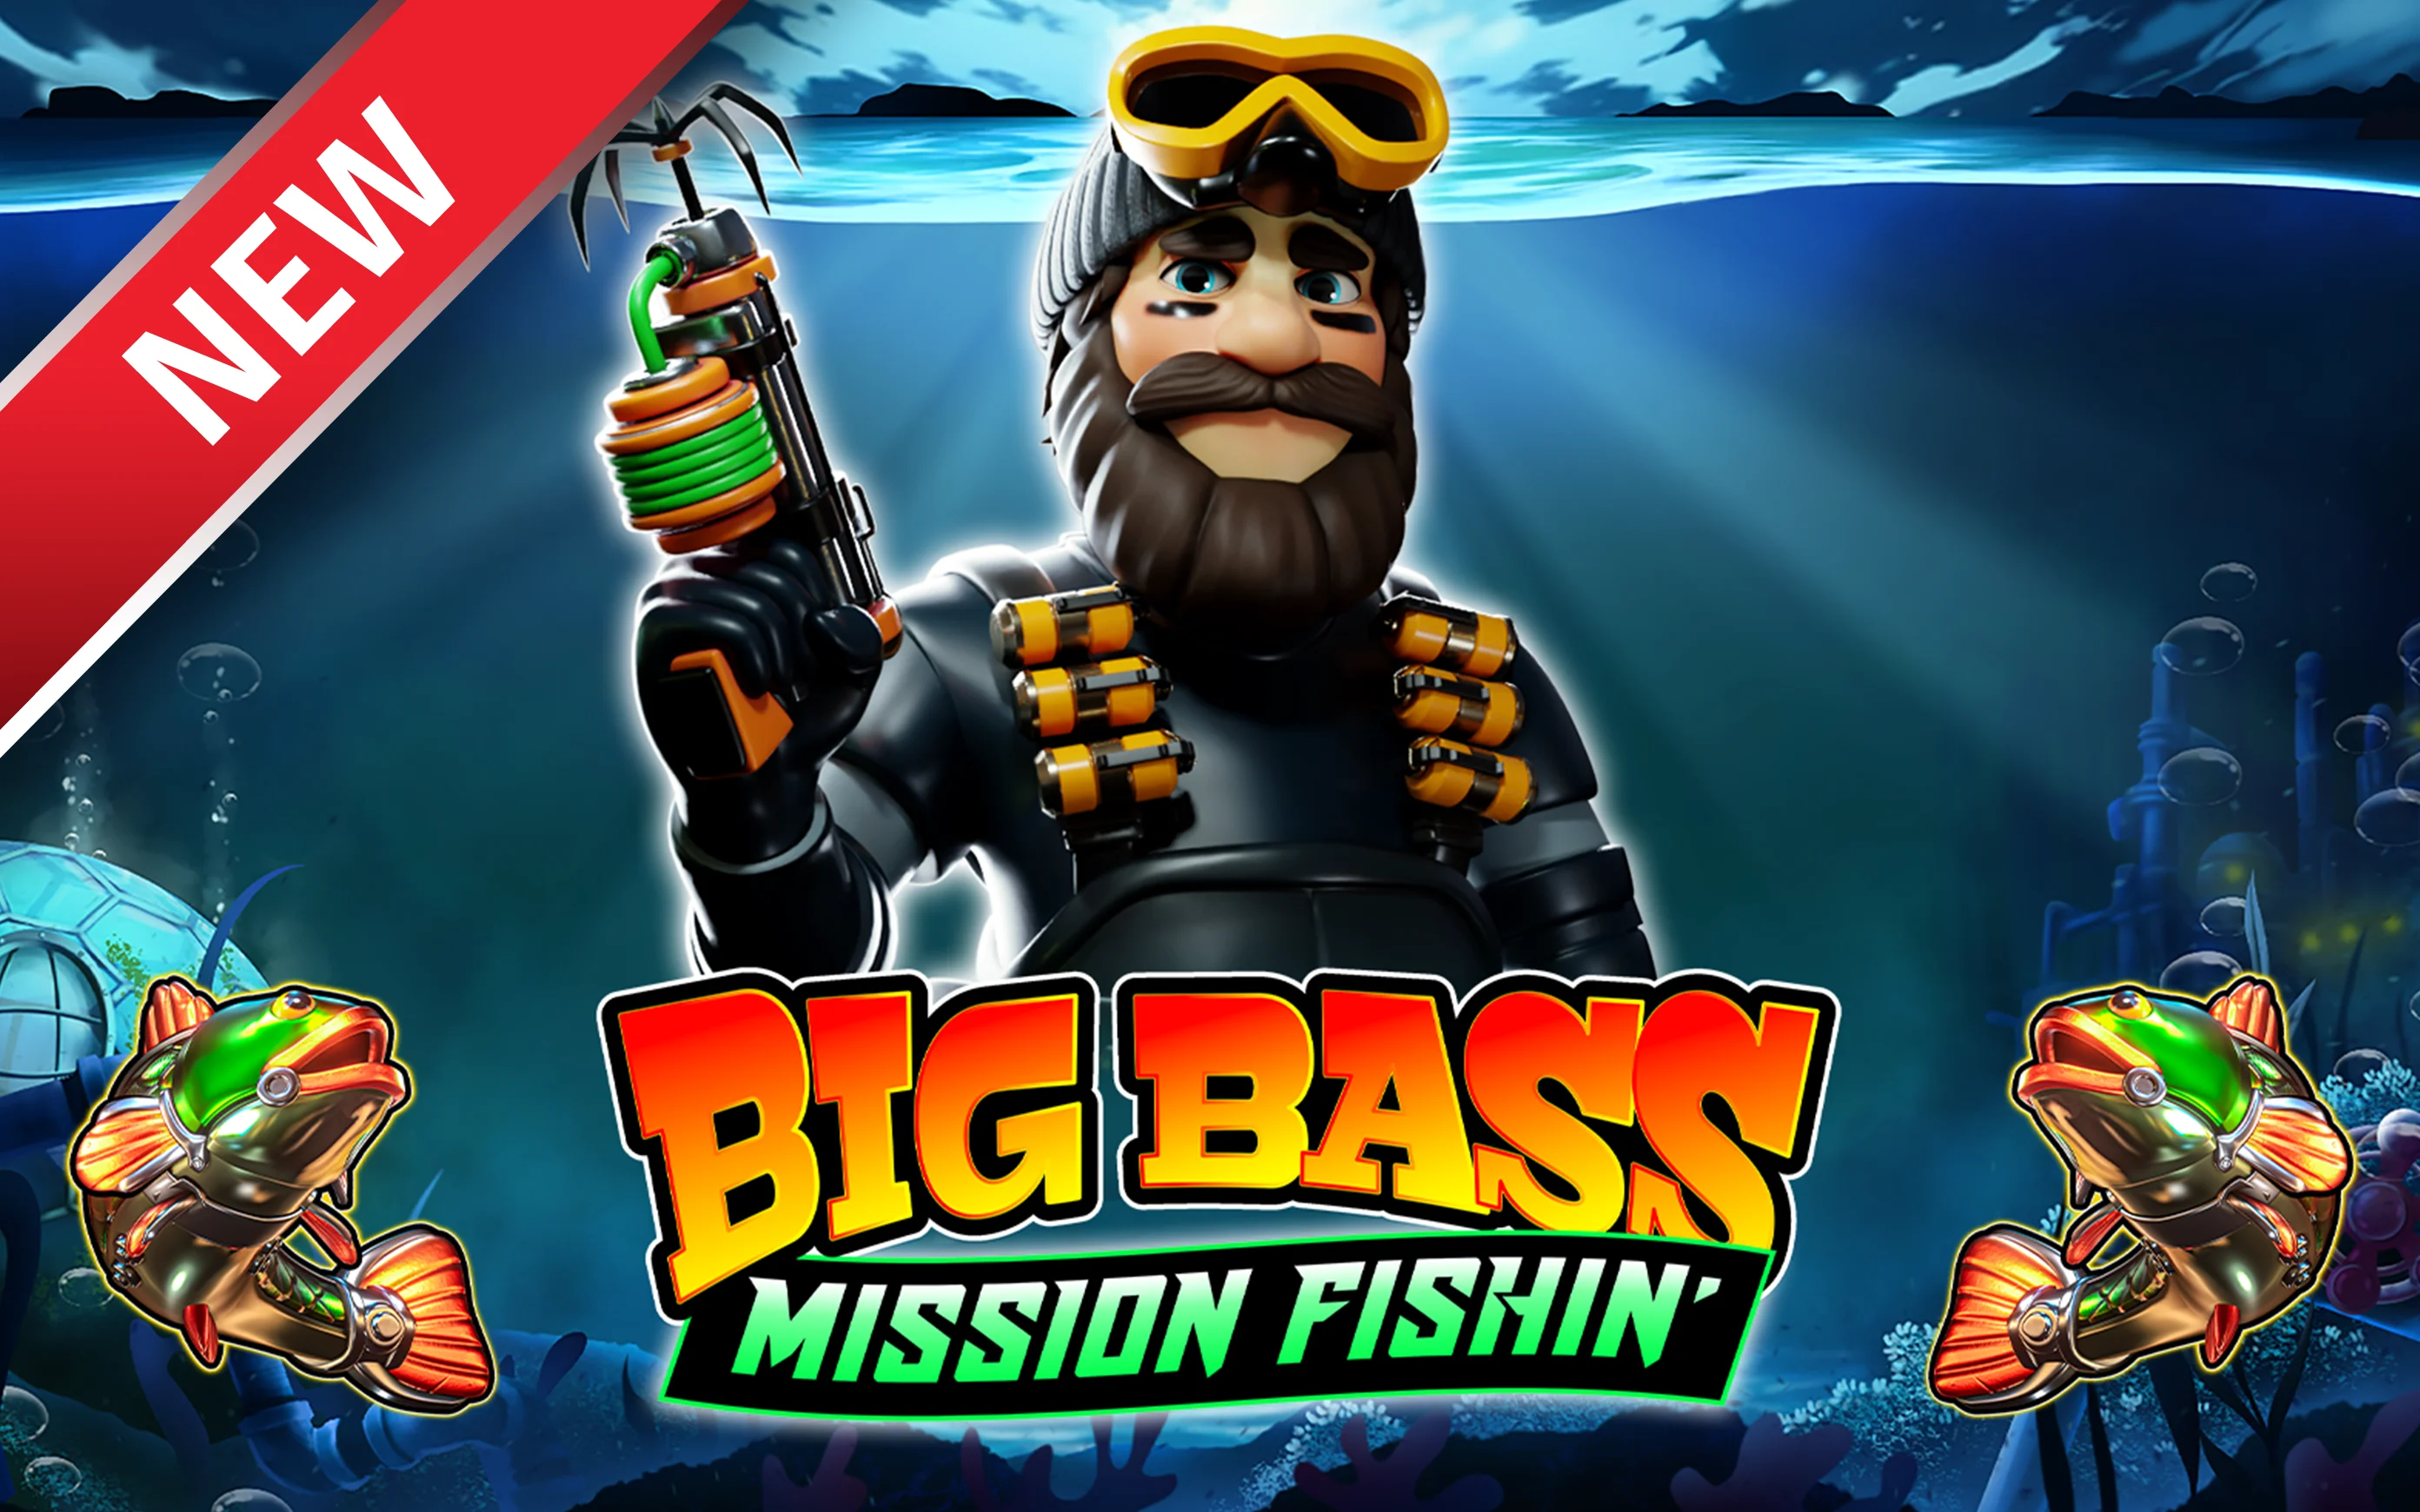 Play Big Bass Mission Fishin’ on Starcasino.be online casino